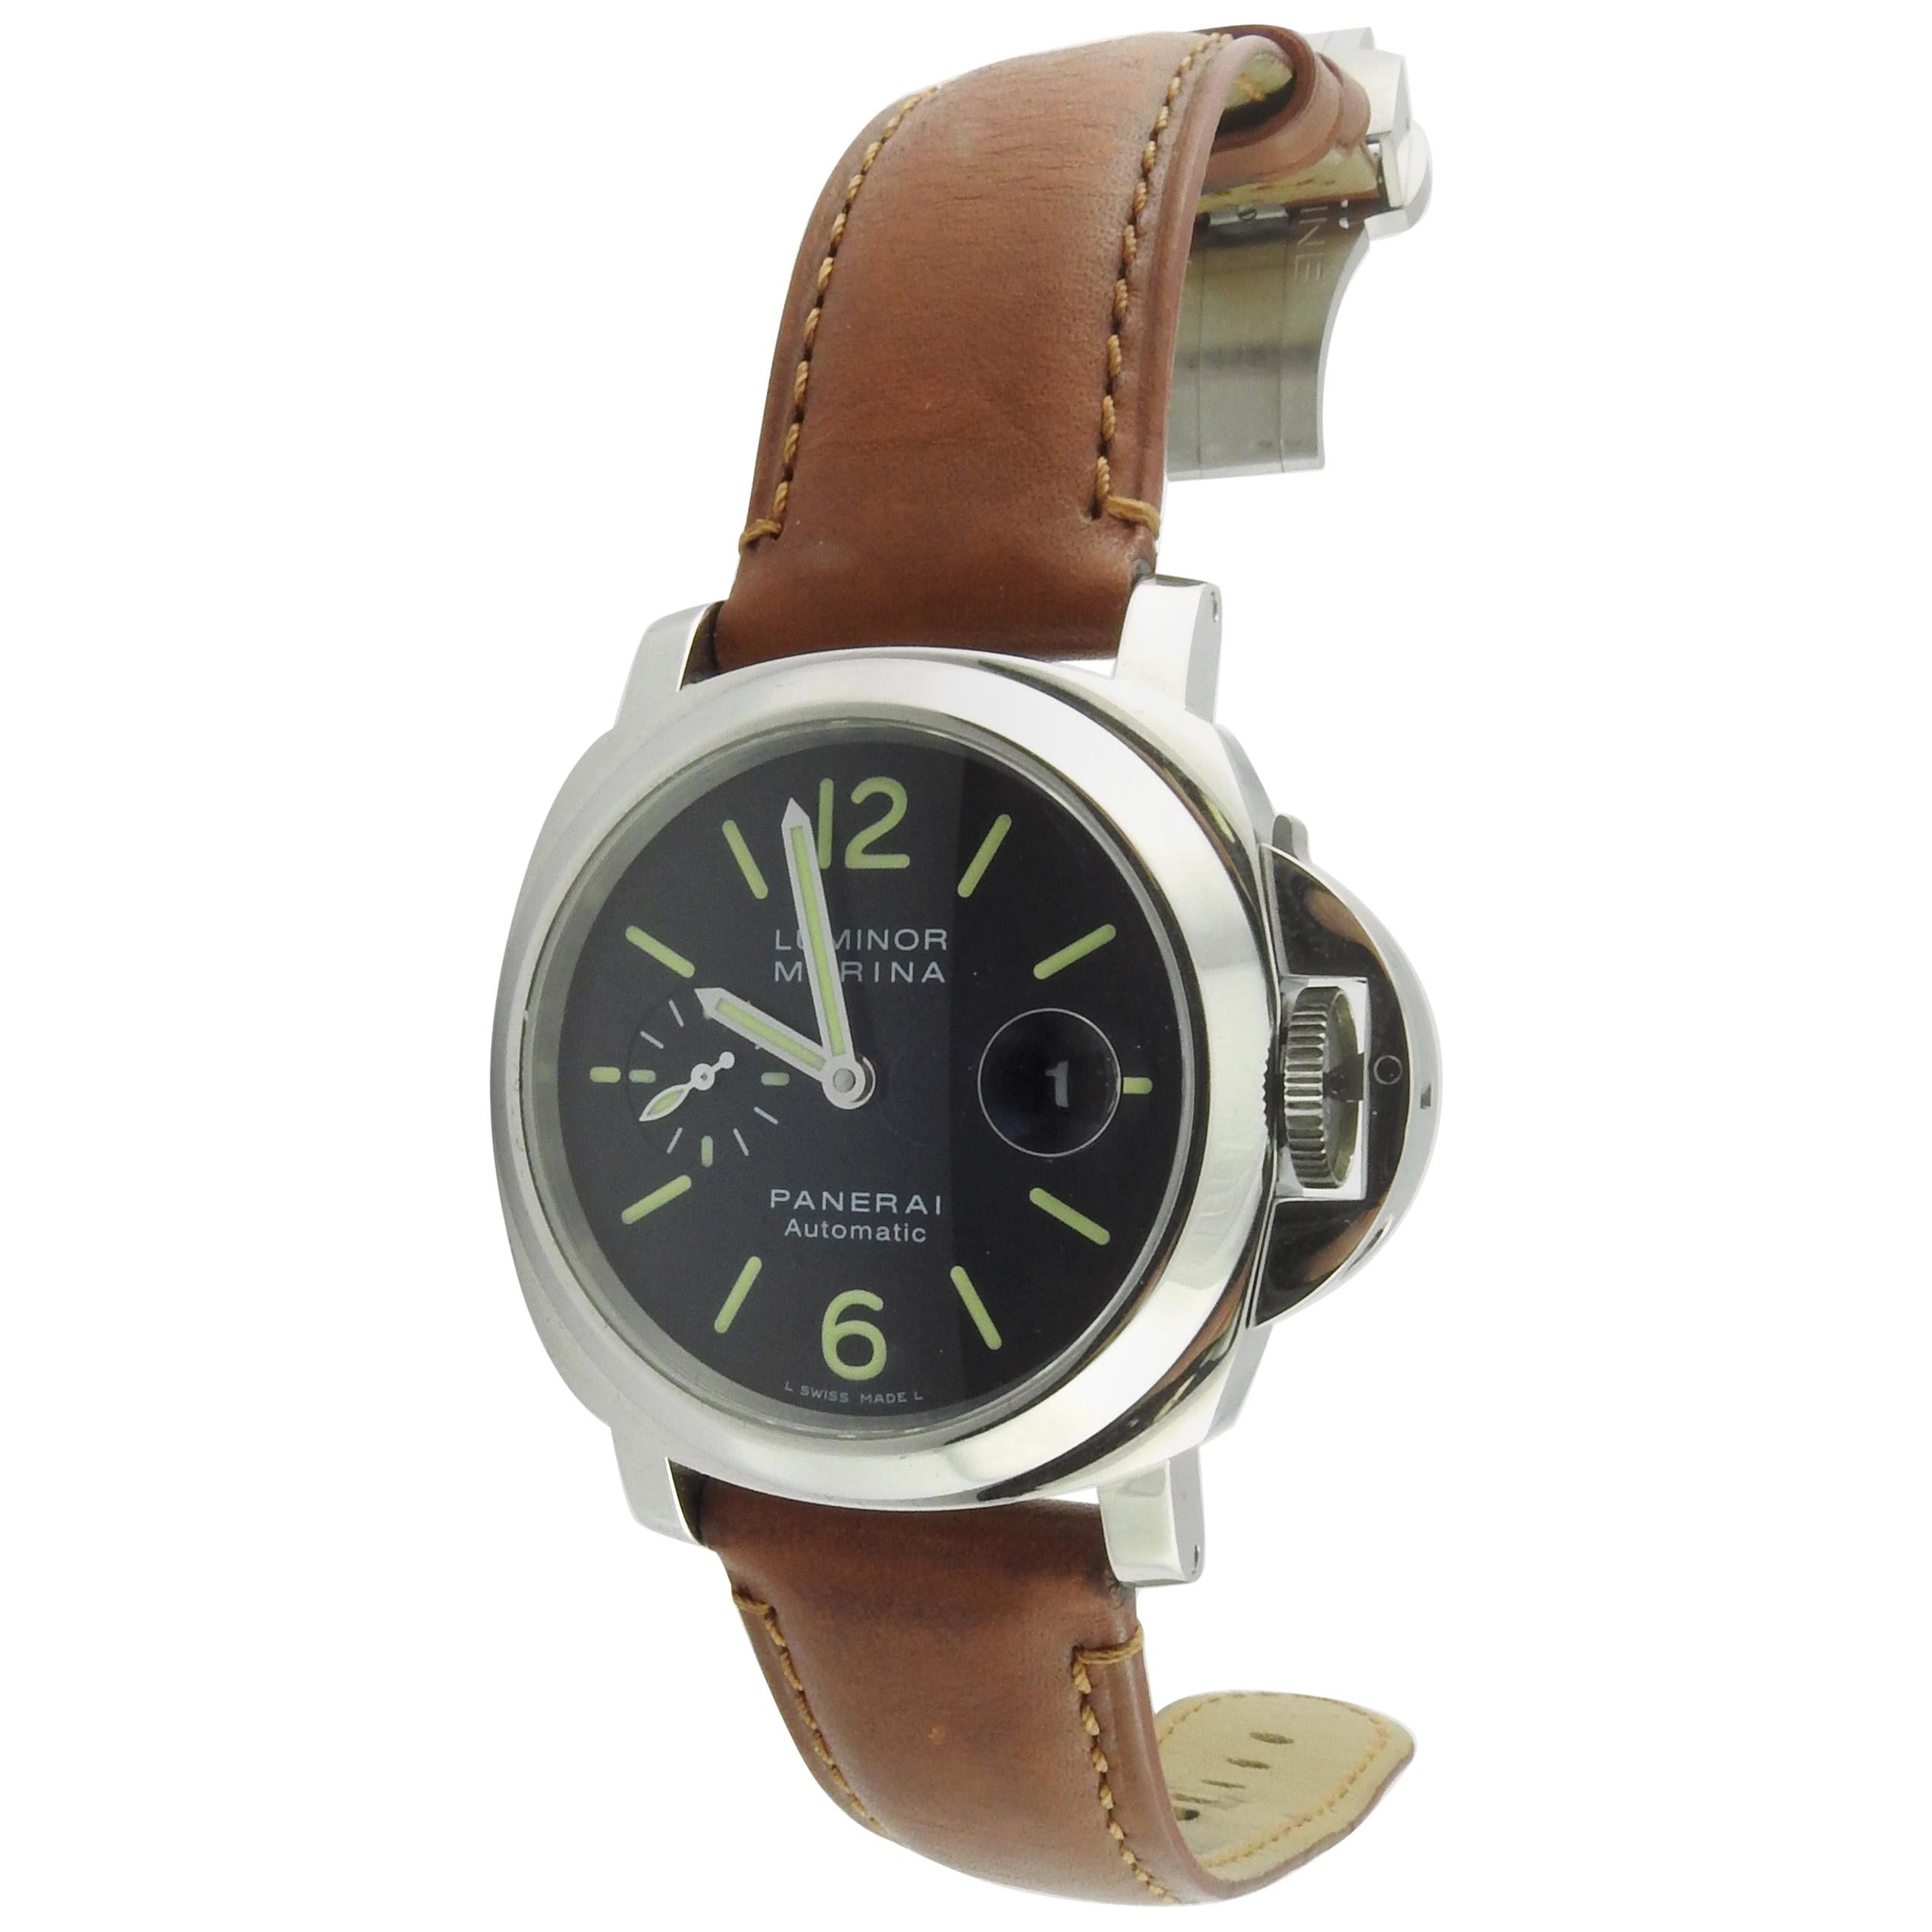 Panerai Men's Automatic Watch OP 6693 PAM 104 Black Dial Luminor Marina